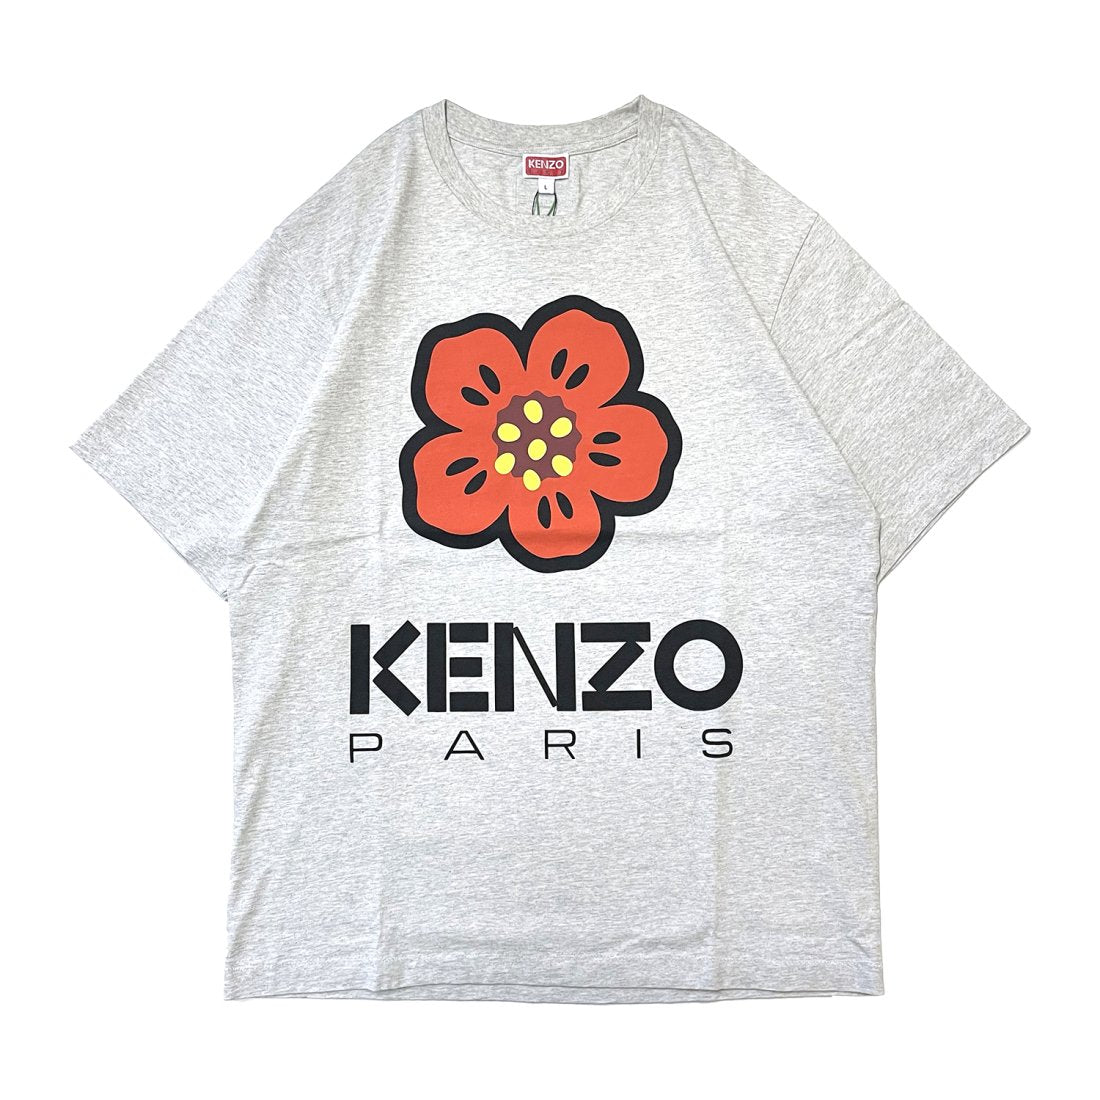 KENZO / T-SHIRT